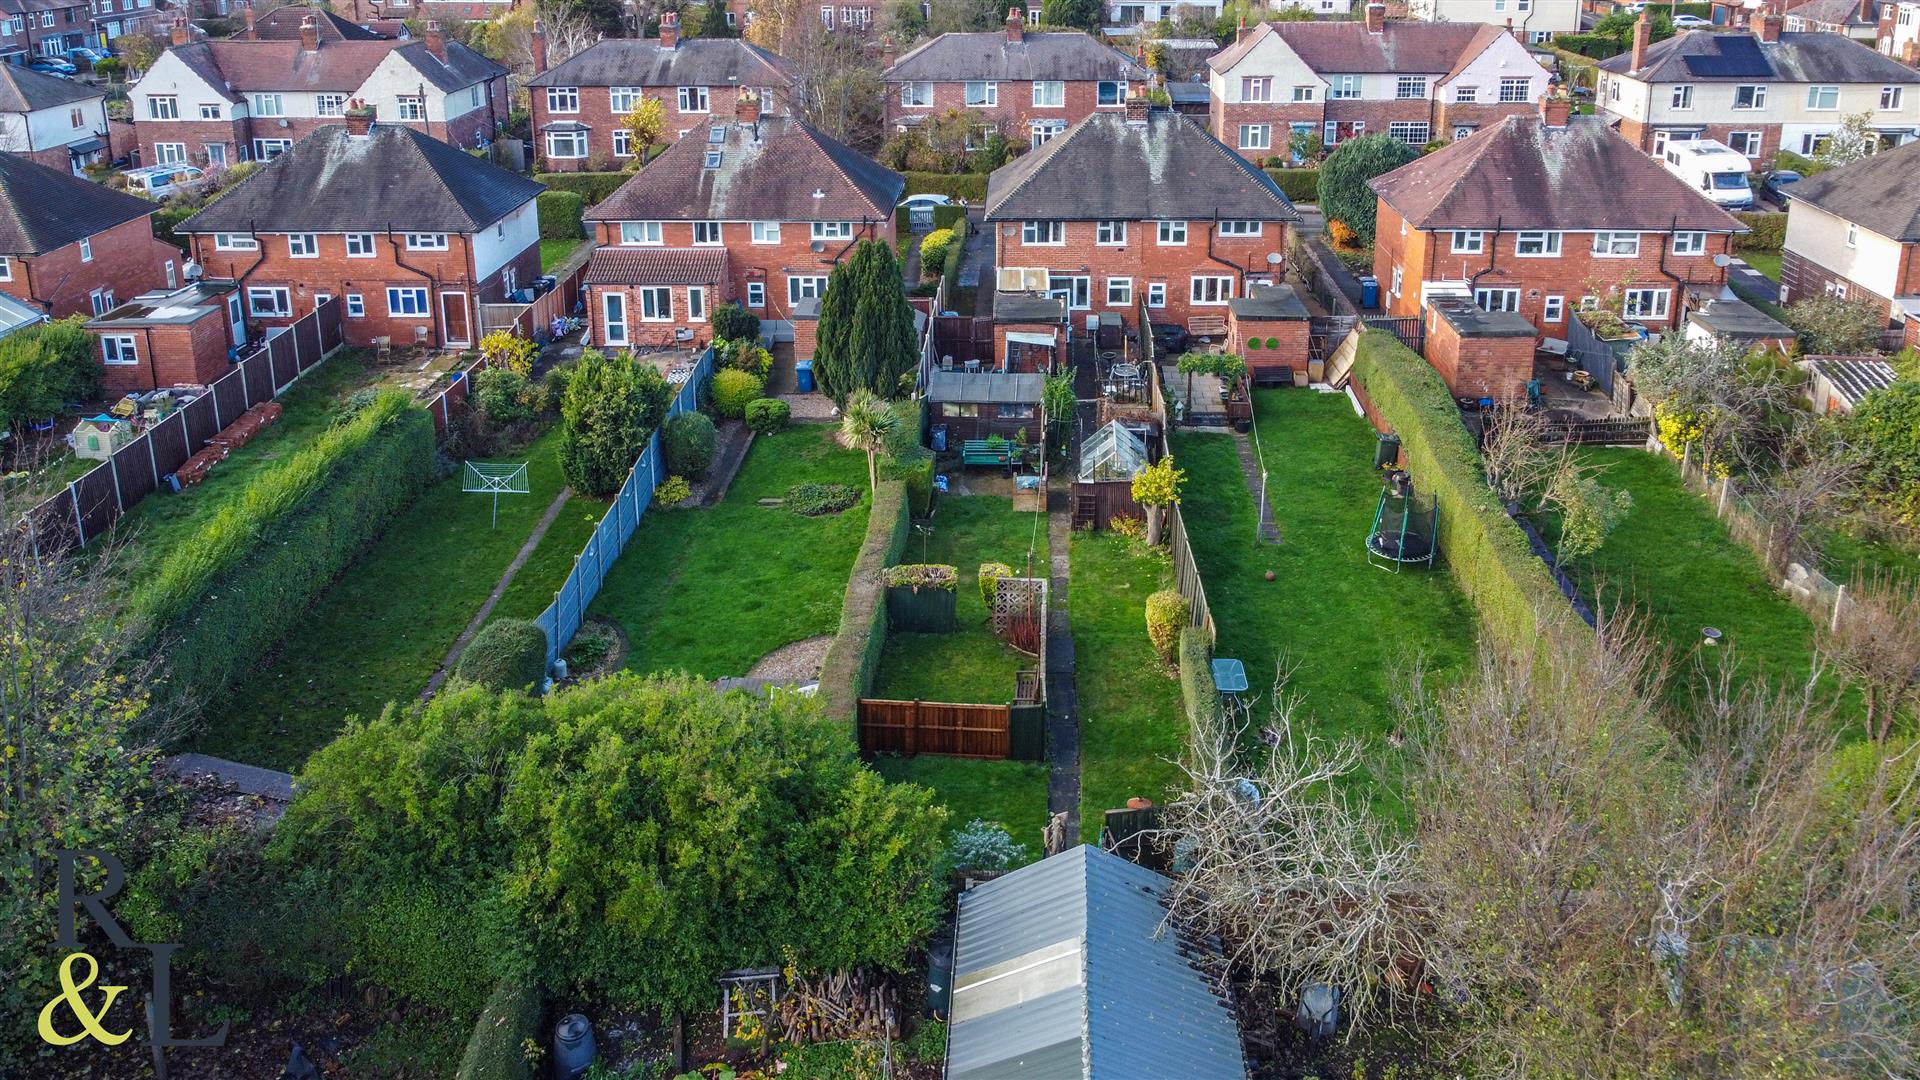 Property image for Cliff Crescent, Radcliffe-On-Trent, Nottingham